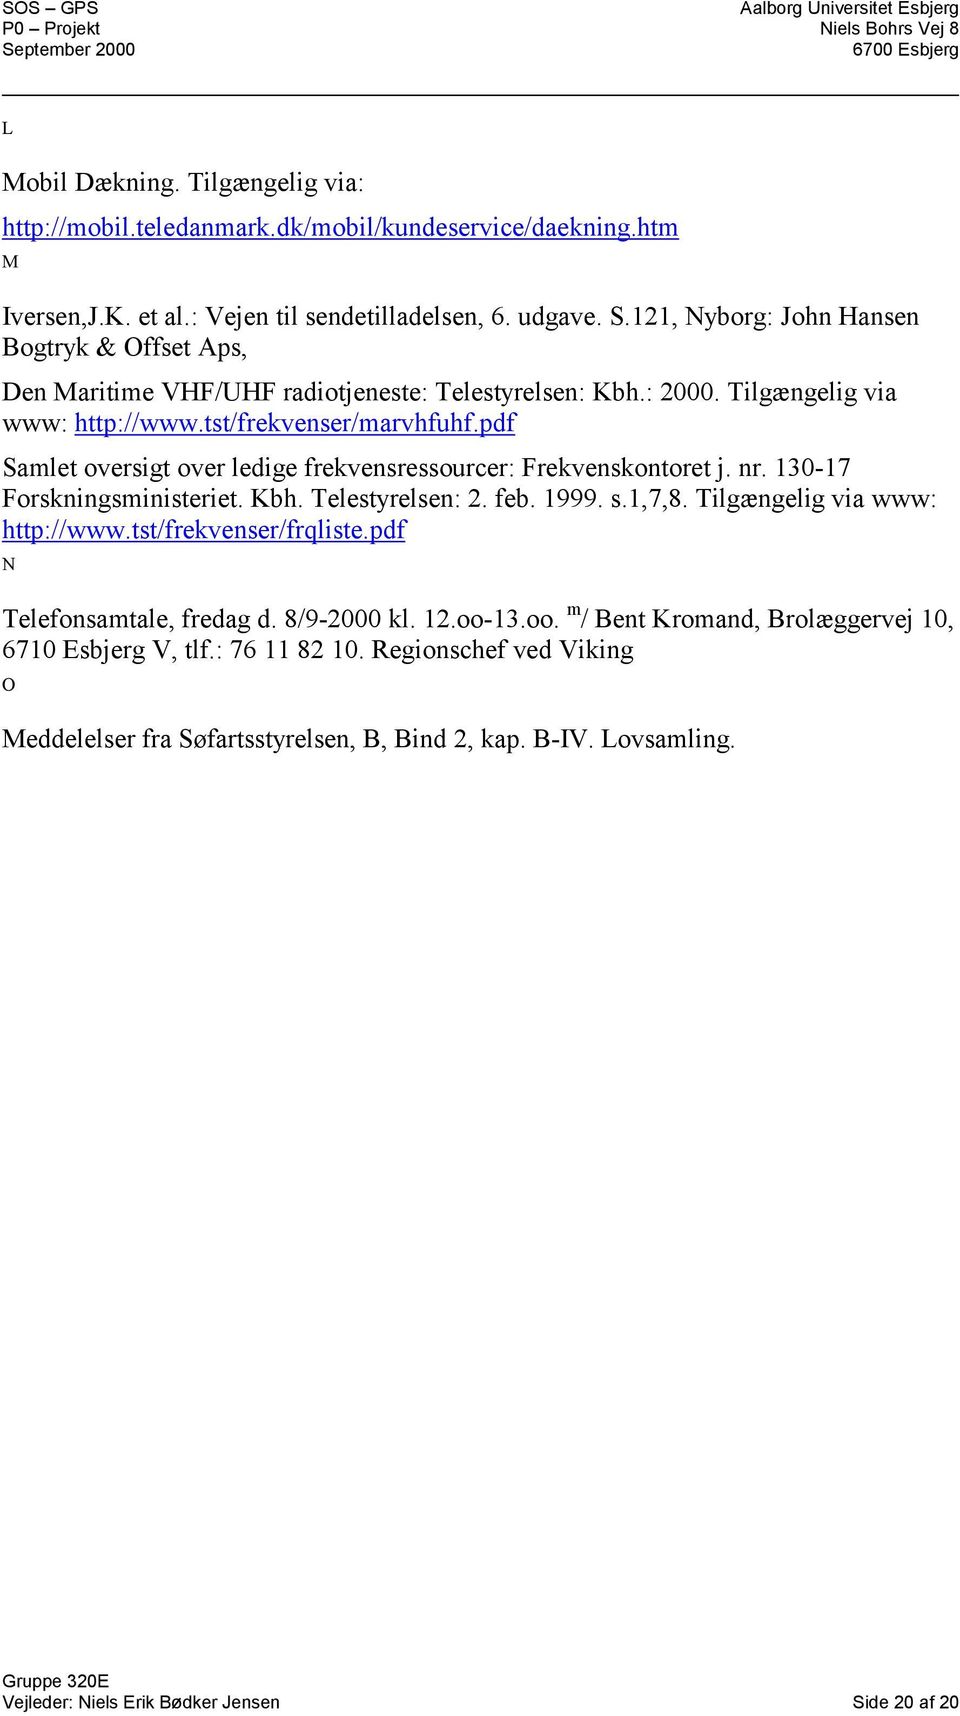 pdf Samlet oversigt over ledige frekvensressourcer: Frekvenskontoret j. nr. 130-17 Forskningsministeriet. Kbh. Telestyrelsen: 2. feb. 1999. s.1,7,8. Tilgængelig via www: http://www.